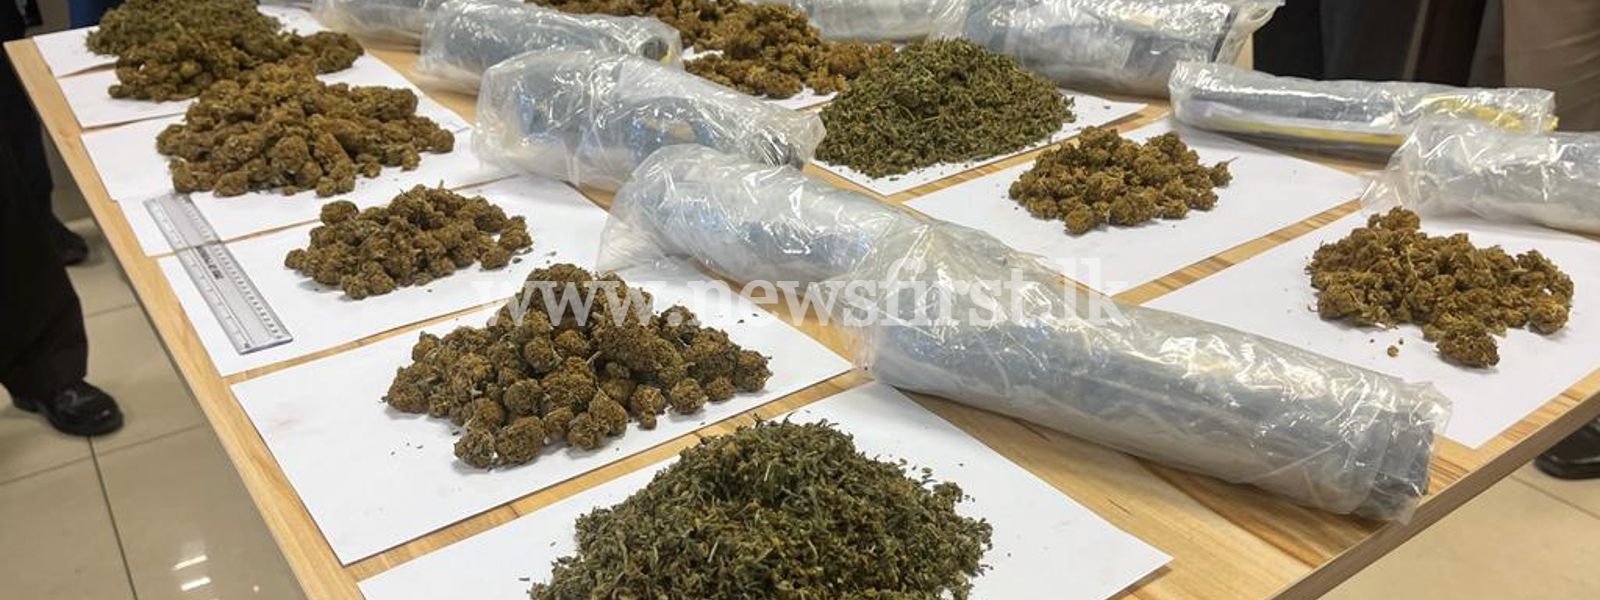 Cannabis users surges in Sri Lanka - NDDCB